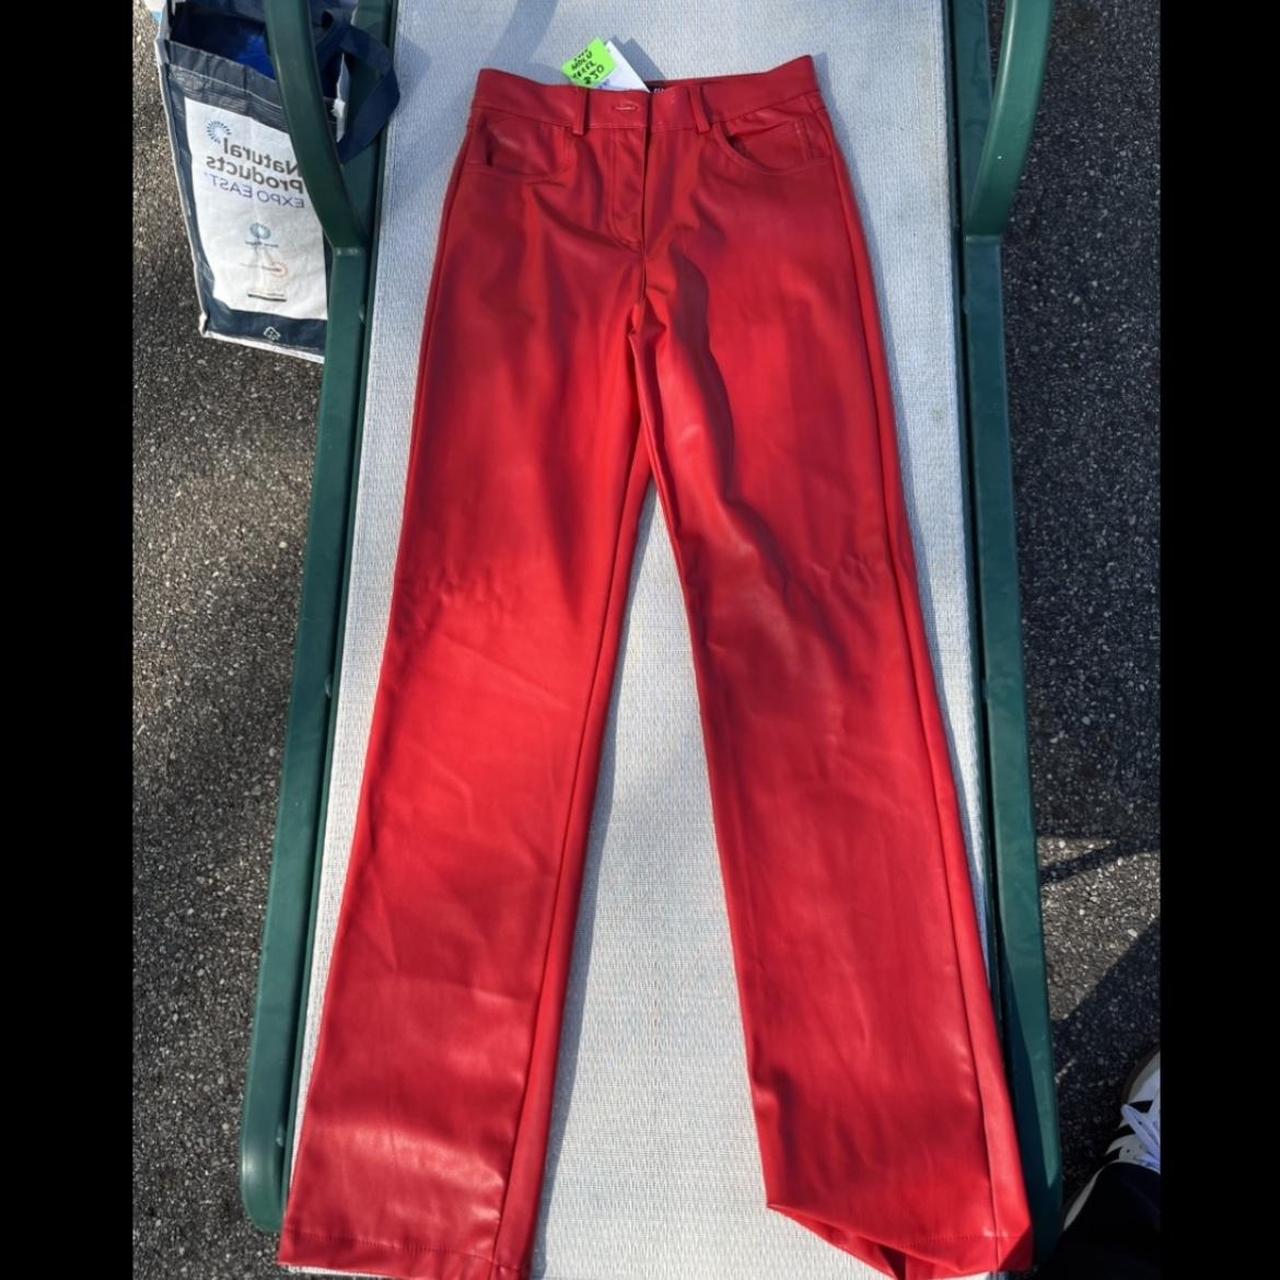 Zara Red Leather Pants #zara #leatherpants #red - Depop